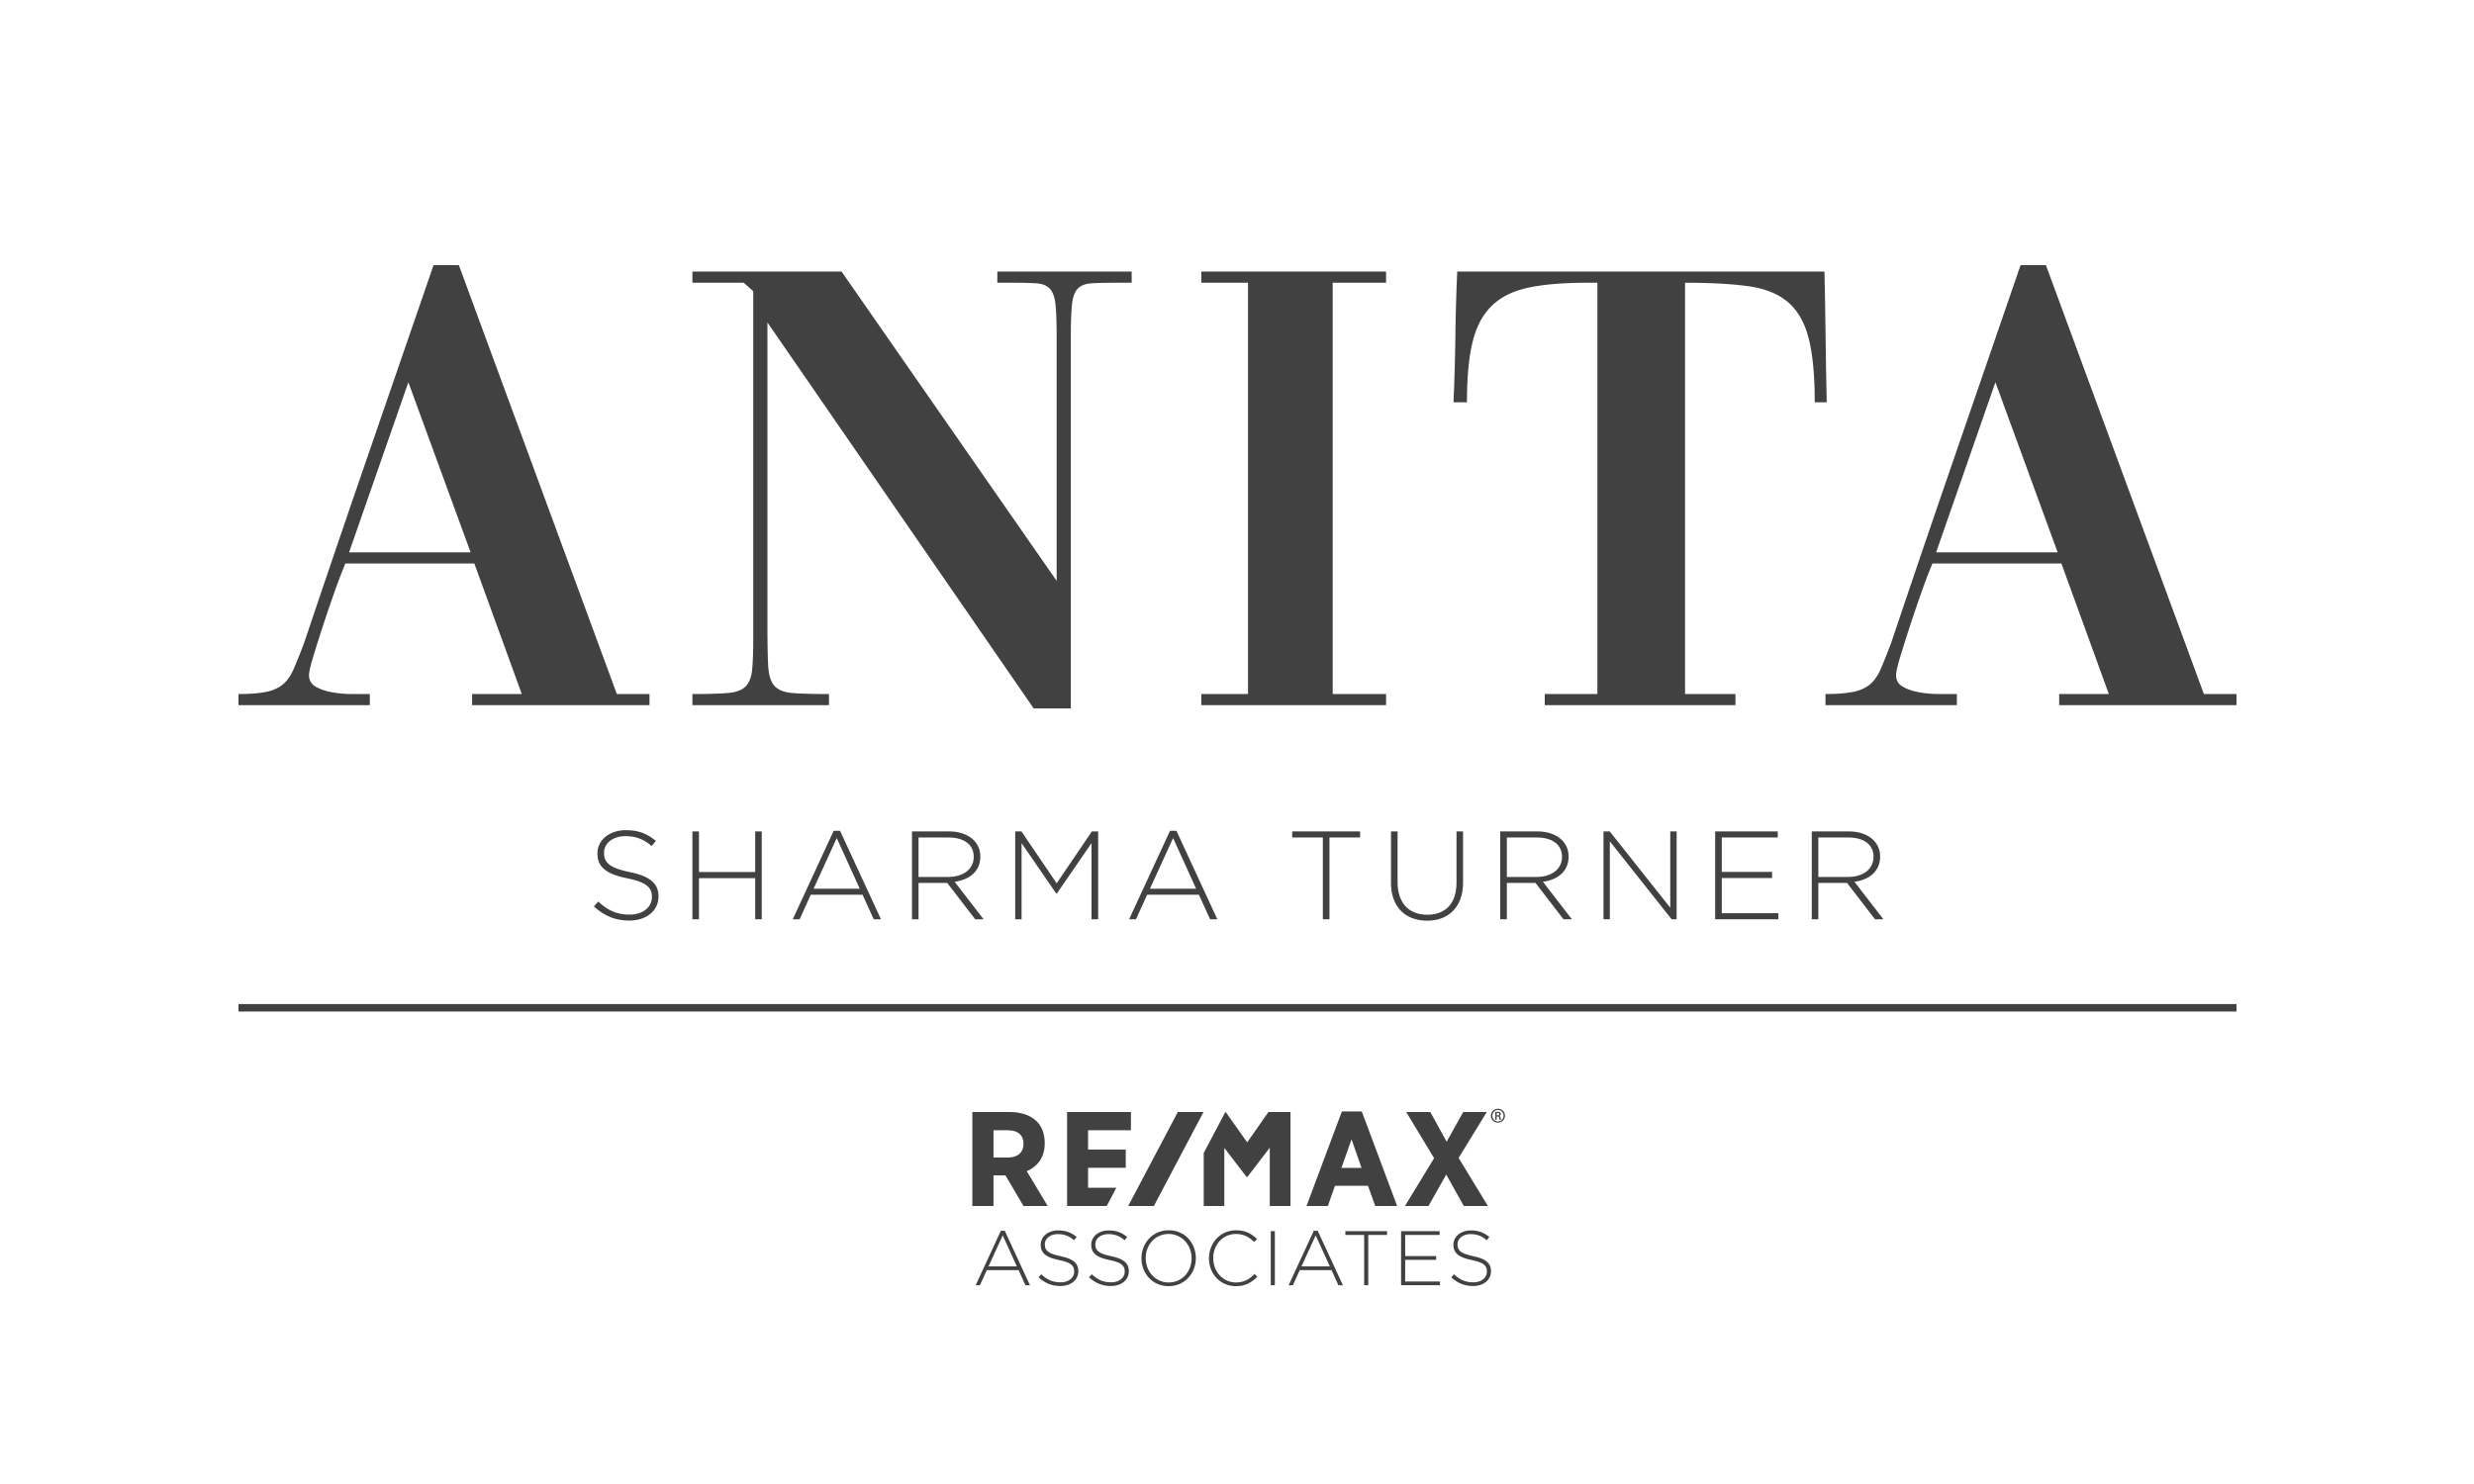 Anita Sharma Turner - RE/MAX Associates